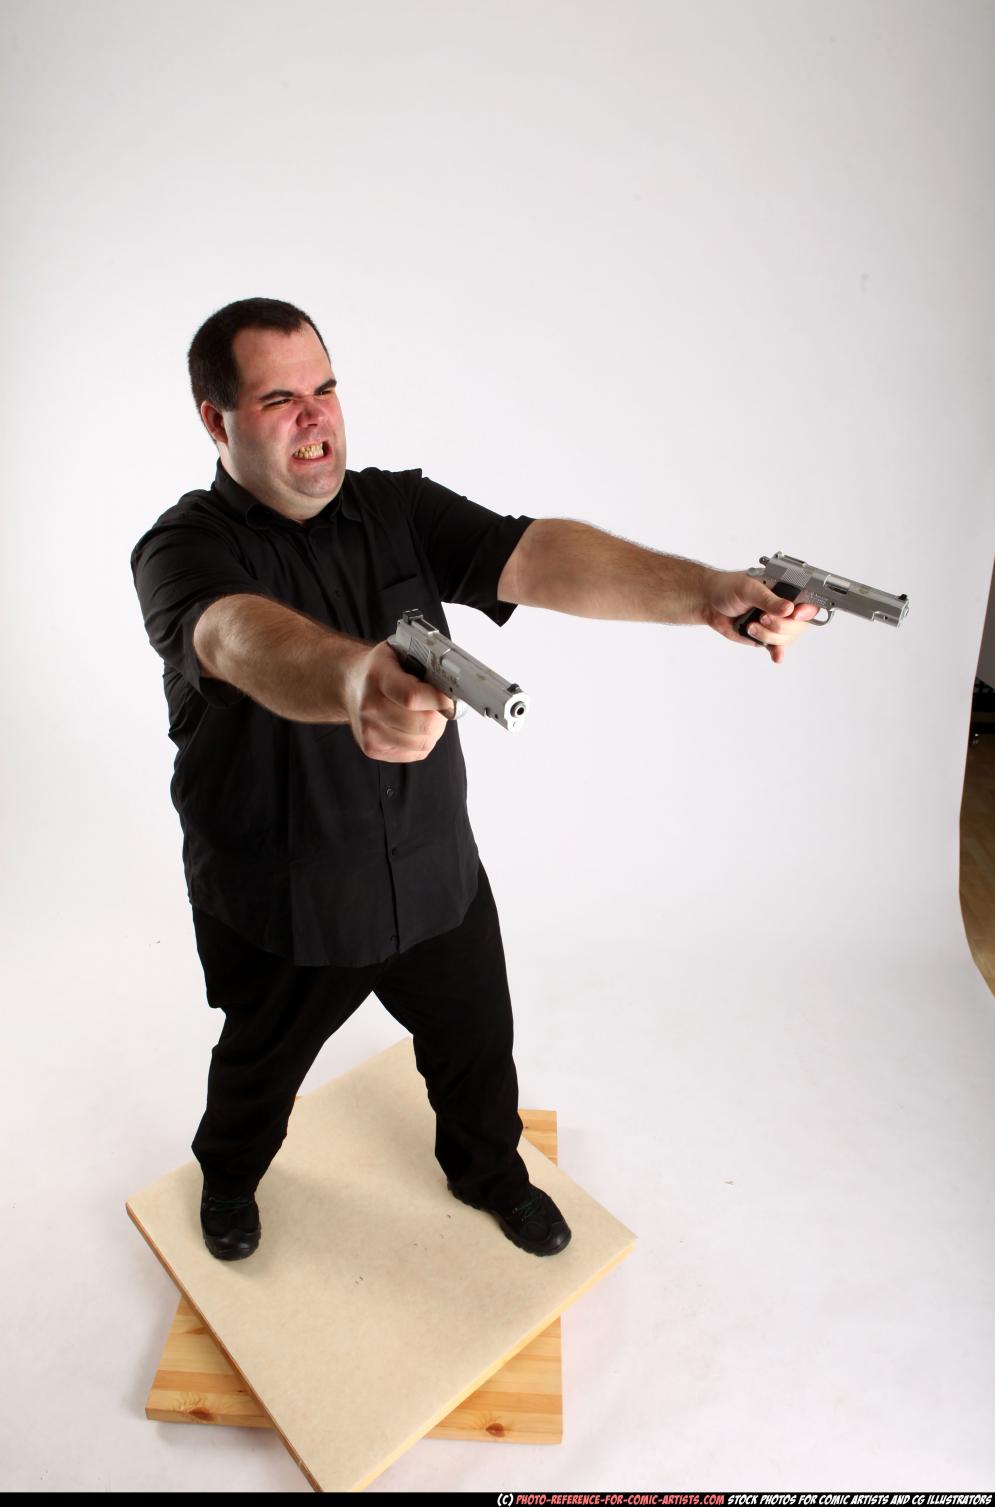 Image from Comic Artist - Furious Mobster Shooting Dual Guns - 226362012_06_mobster_dual_guns_pose4_01_a.jpg